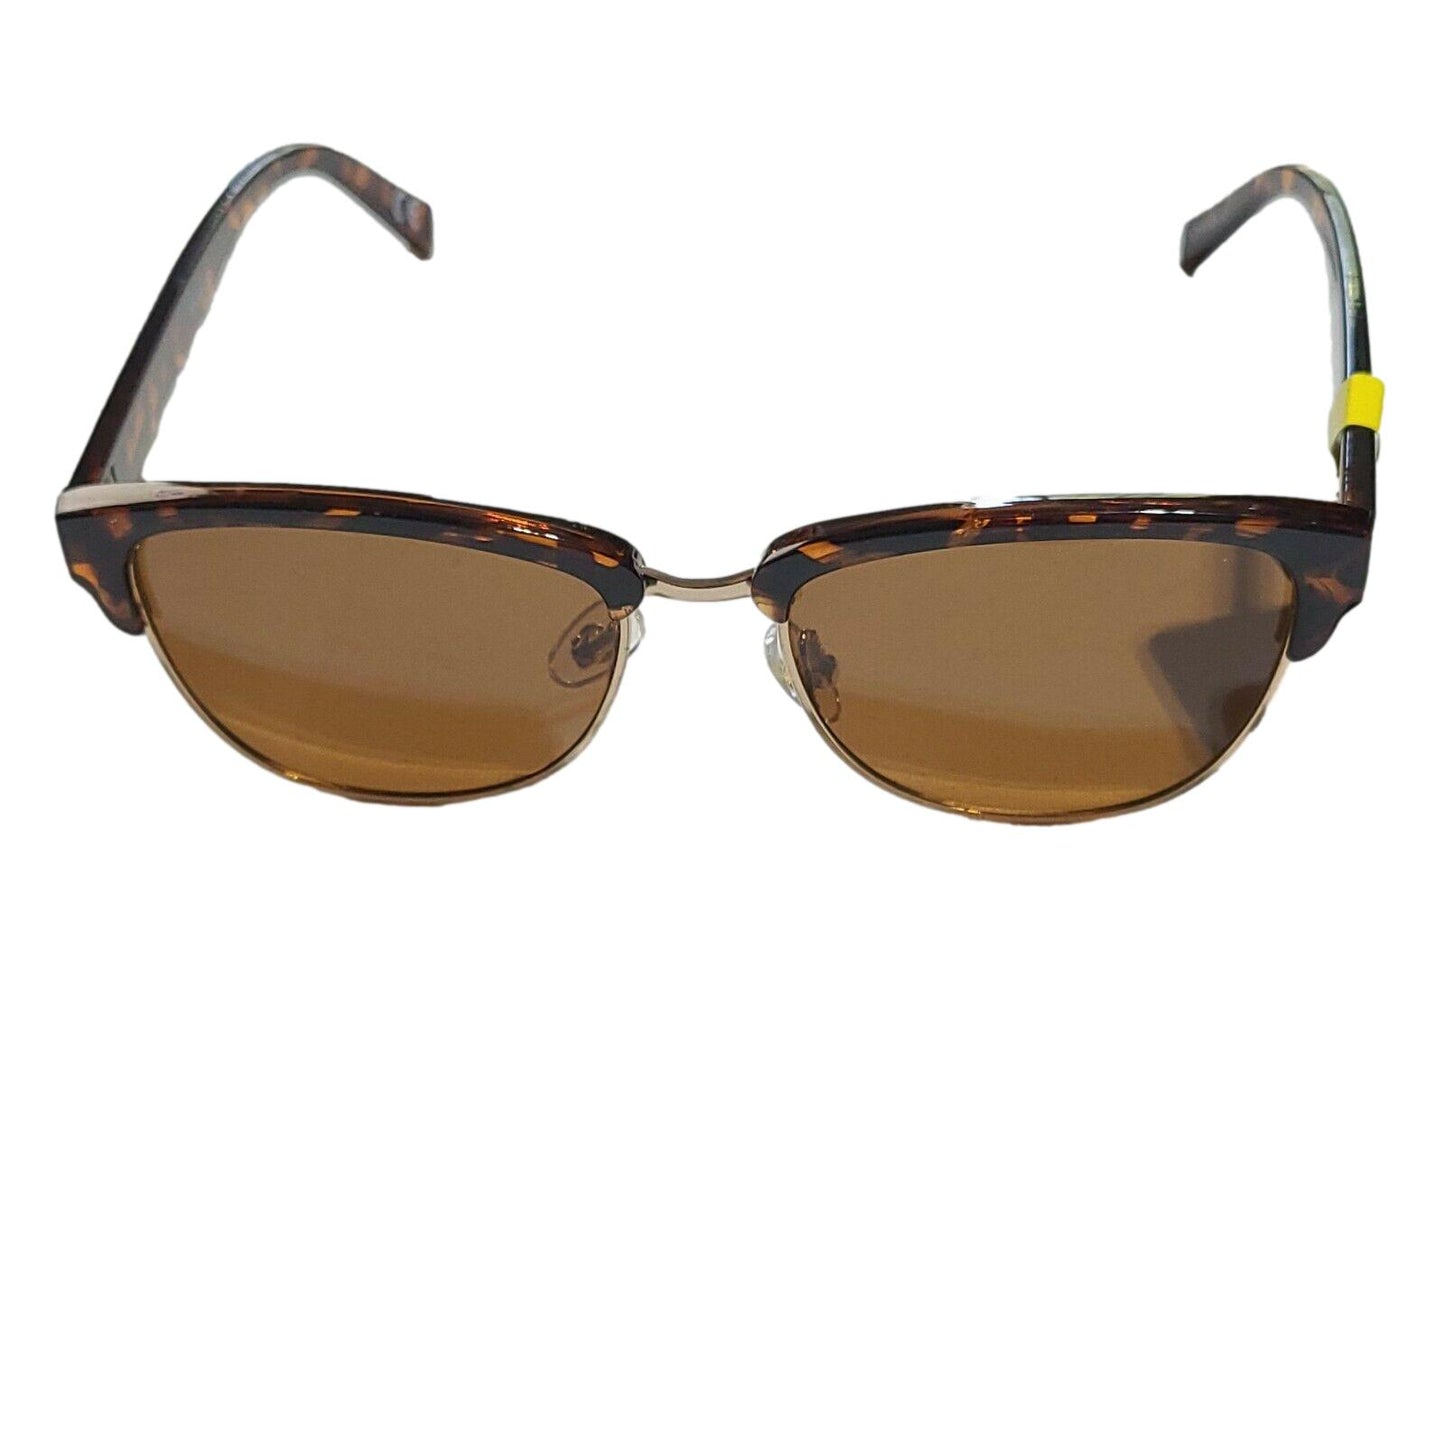 Foster Grant LP 1801 sunglasses